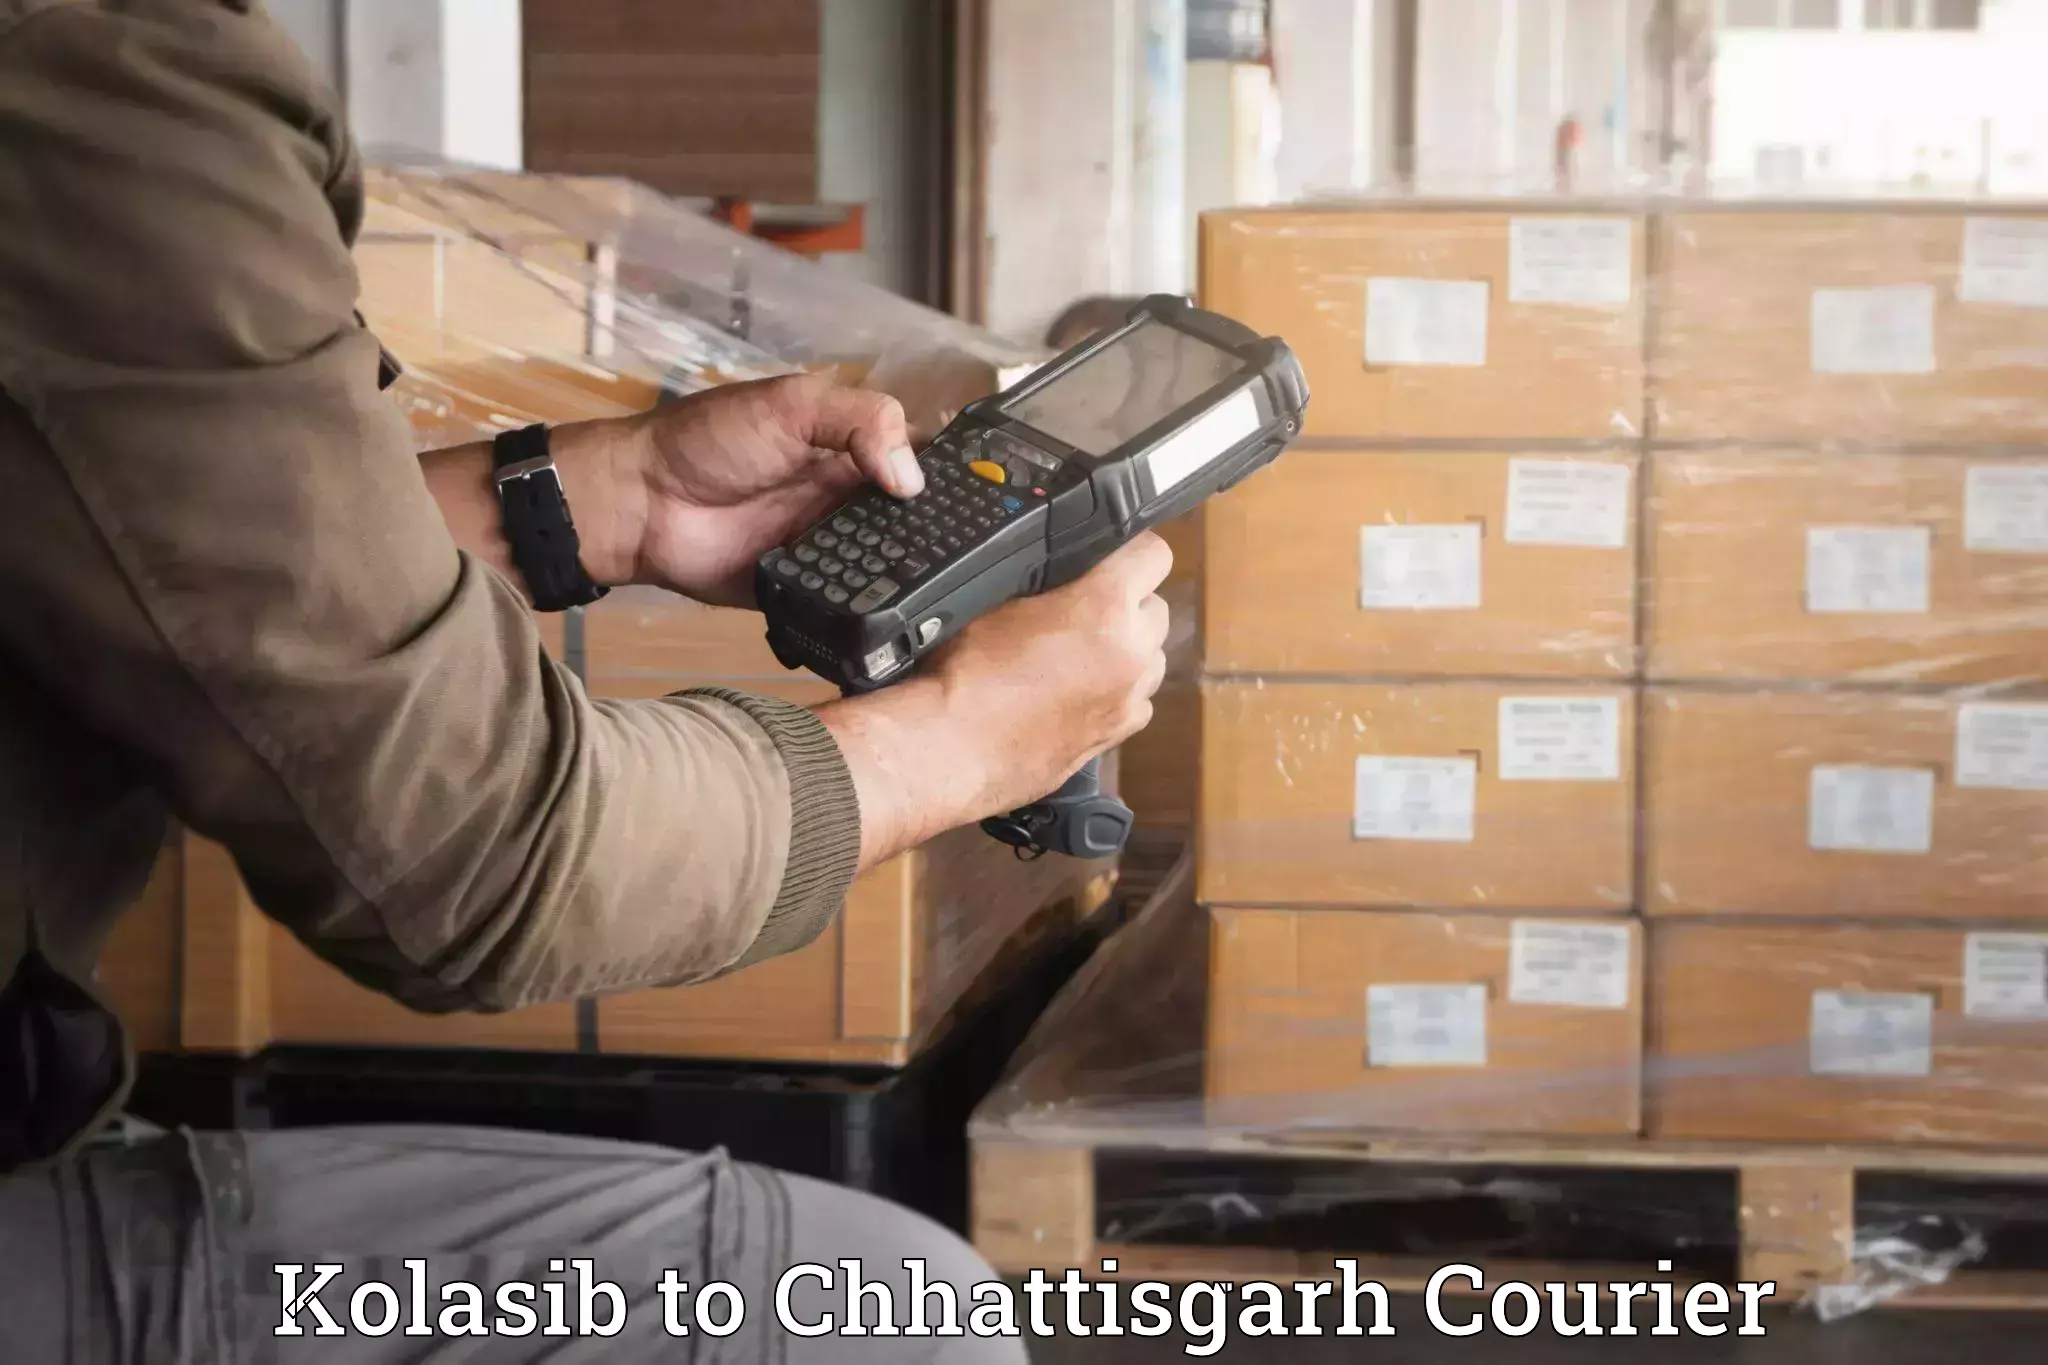 Professional moving company Kolasib to Chhattisgarh